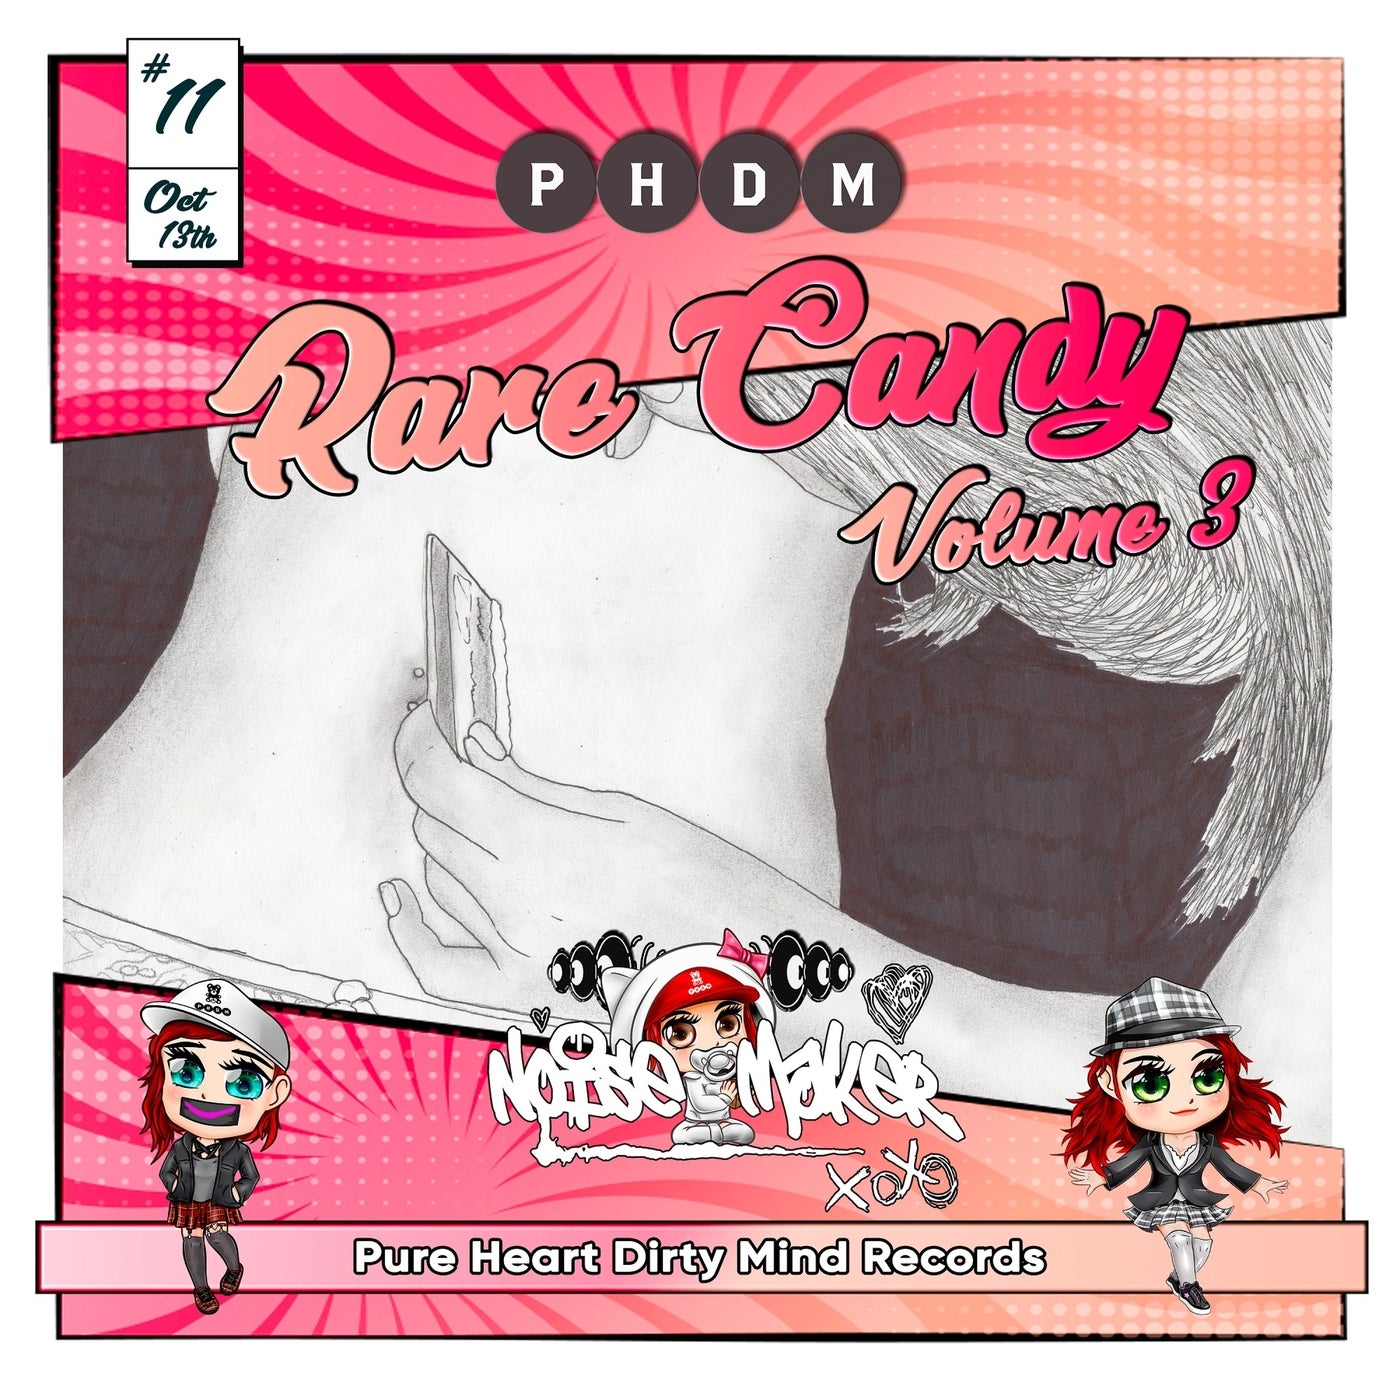 Rare Candy Volume 3